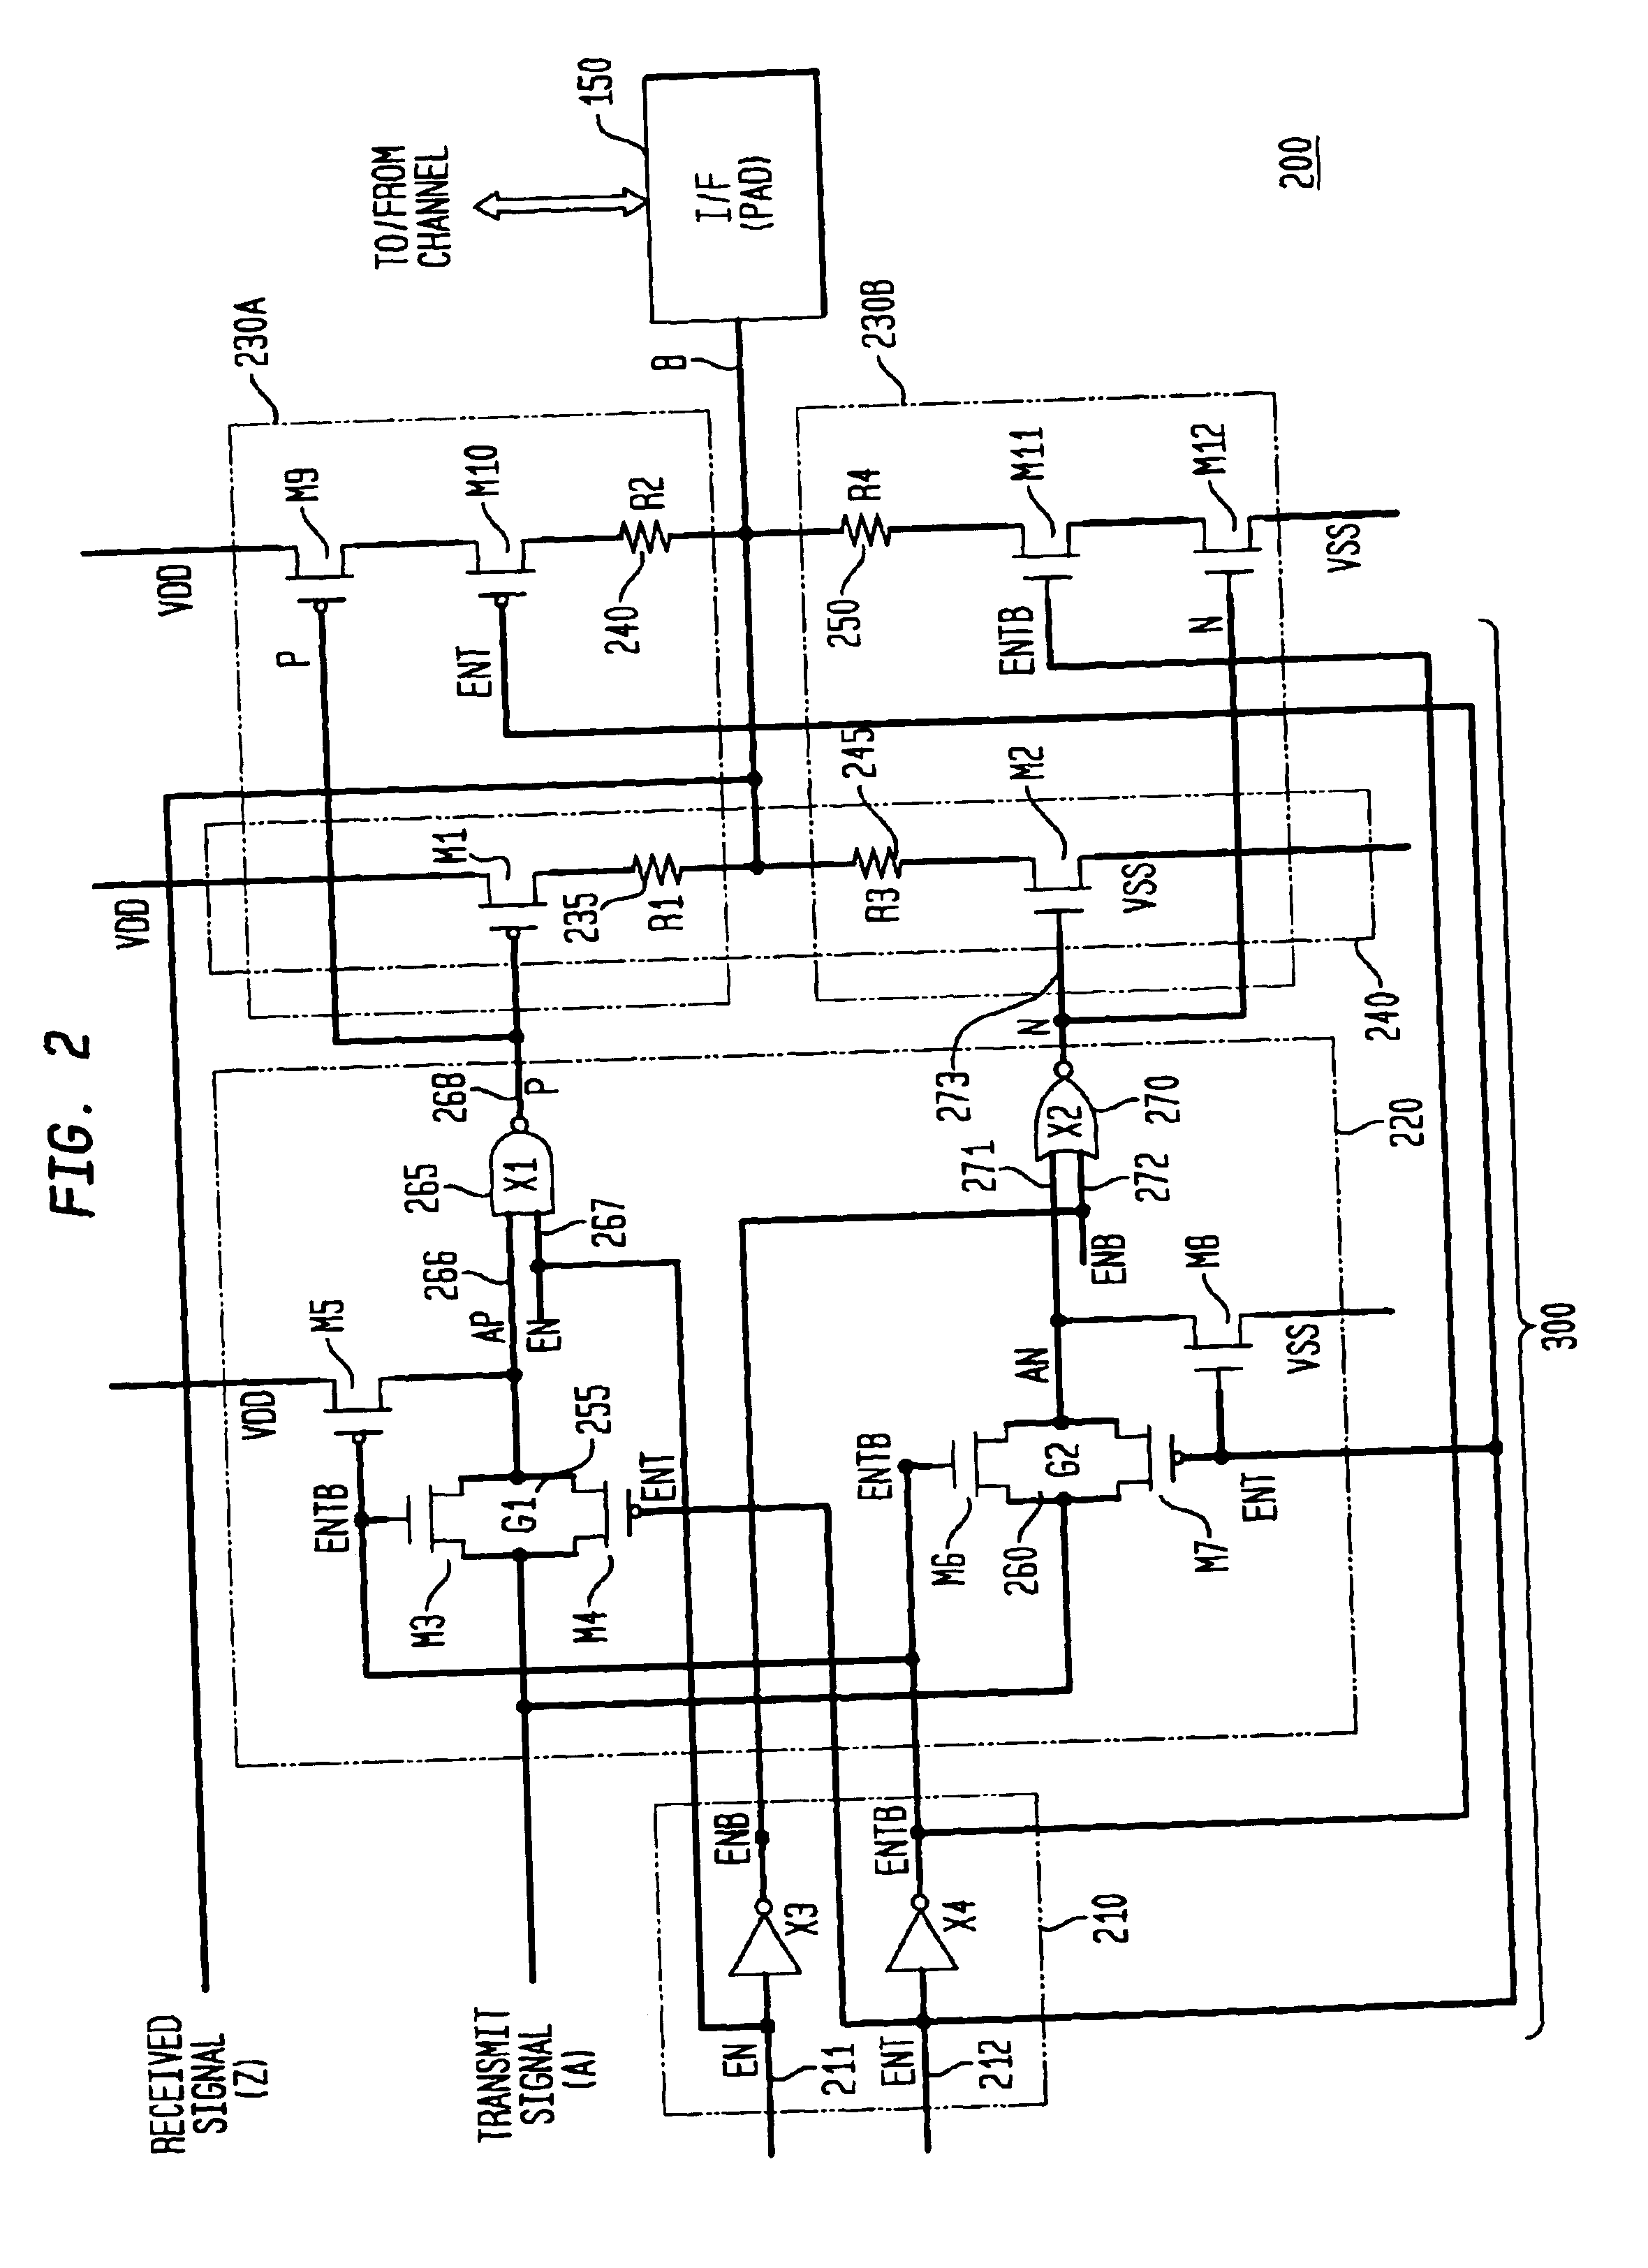 Bi-directional impedance matching circuit